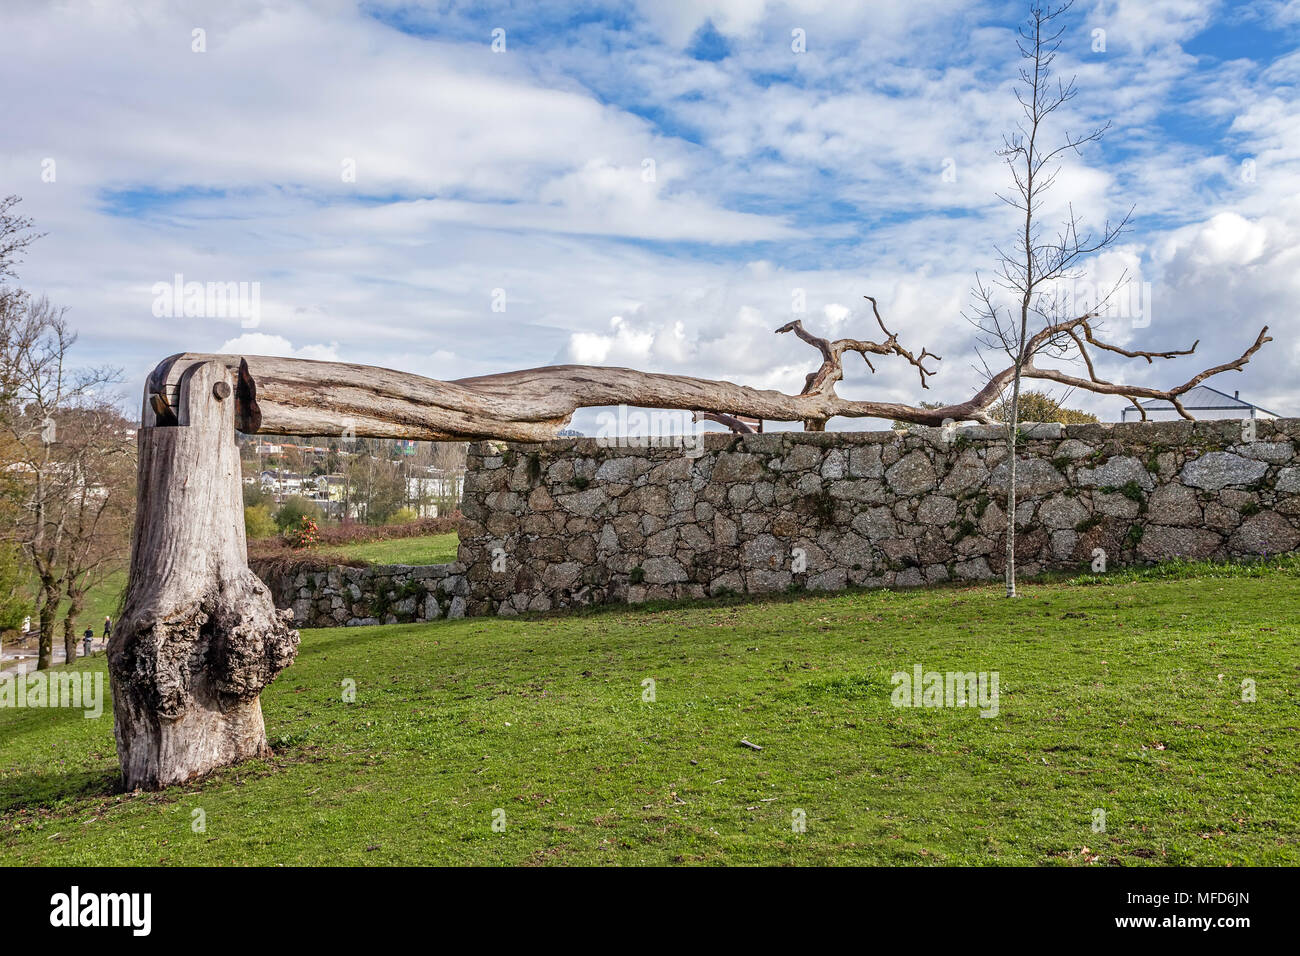 Vila Nova de Famalicao, Portugal - March 31, 2018: Urban art made of a dead tree with a hinge in Parque da Devesa Urban Park. Stock Photo